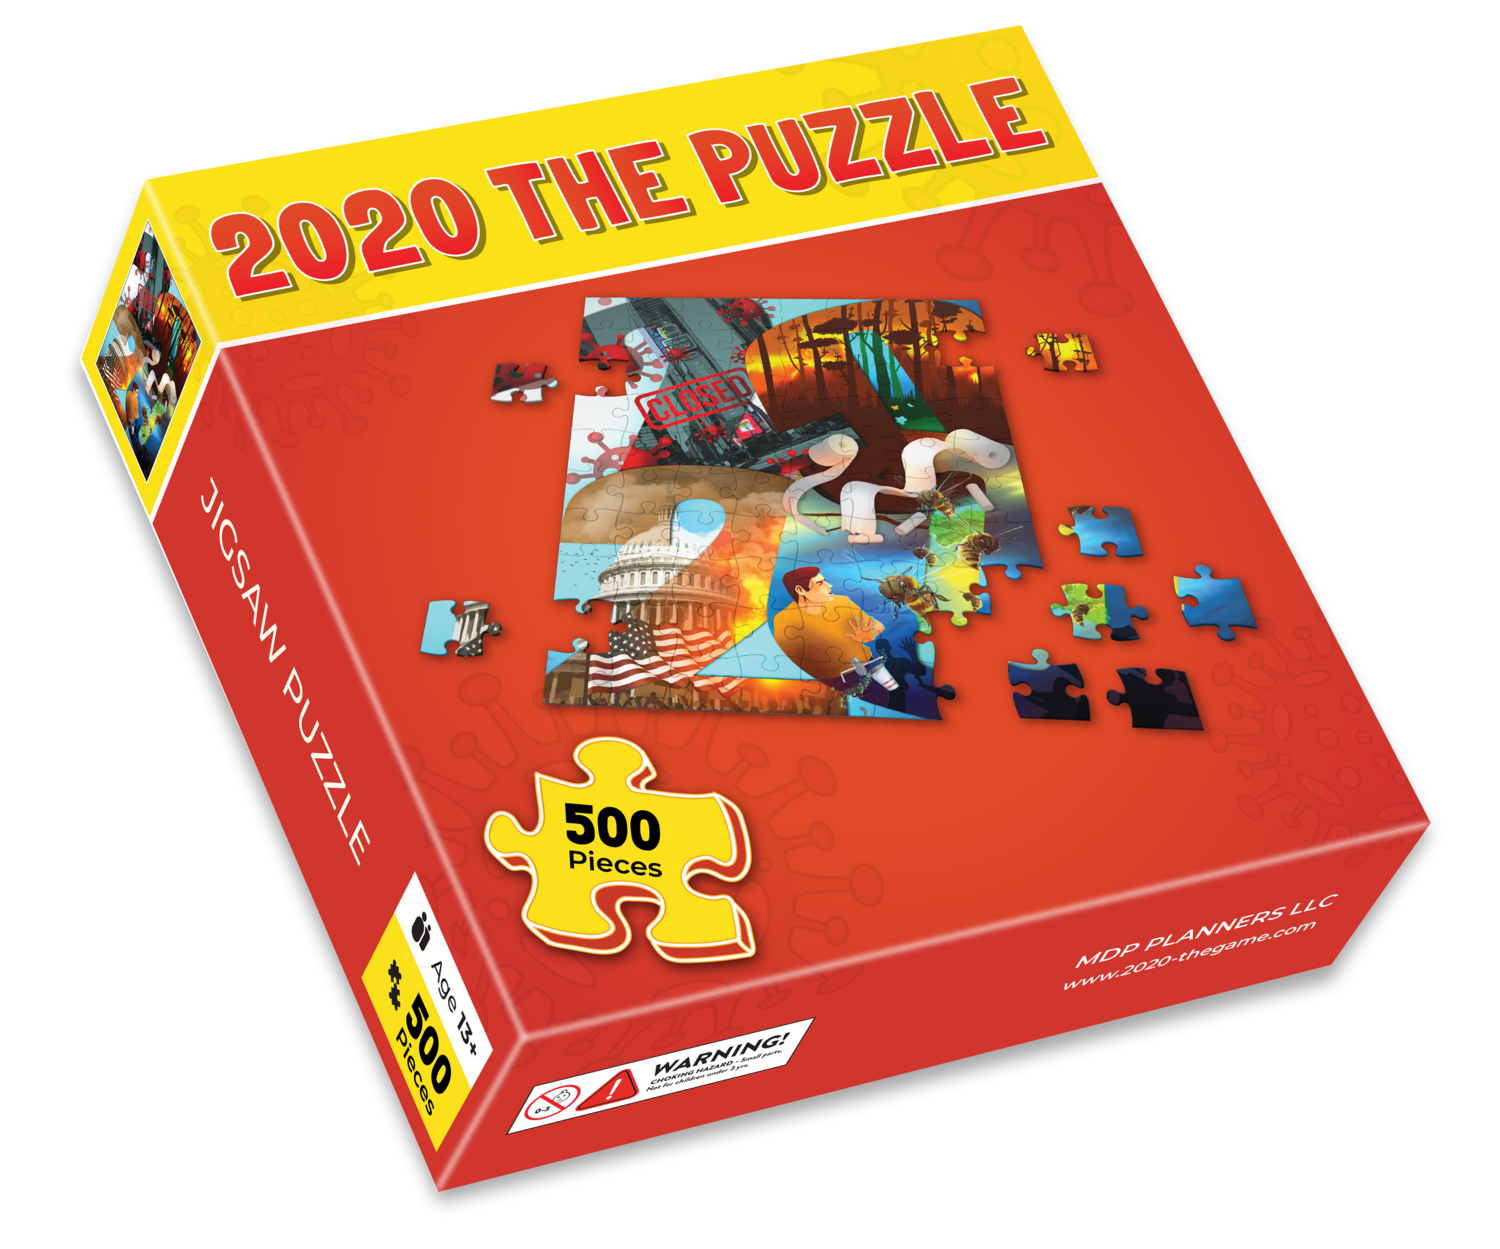 2020 The Puzzle 500 piece